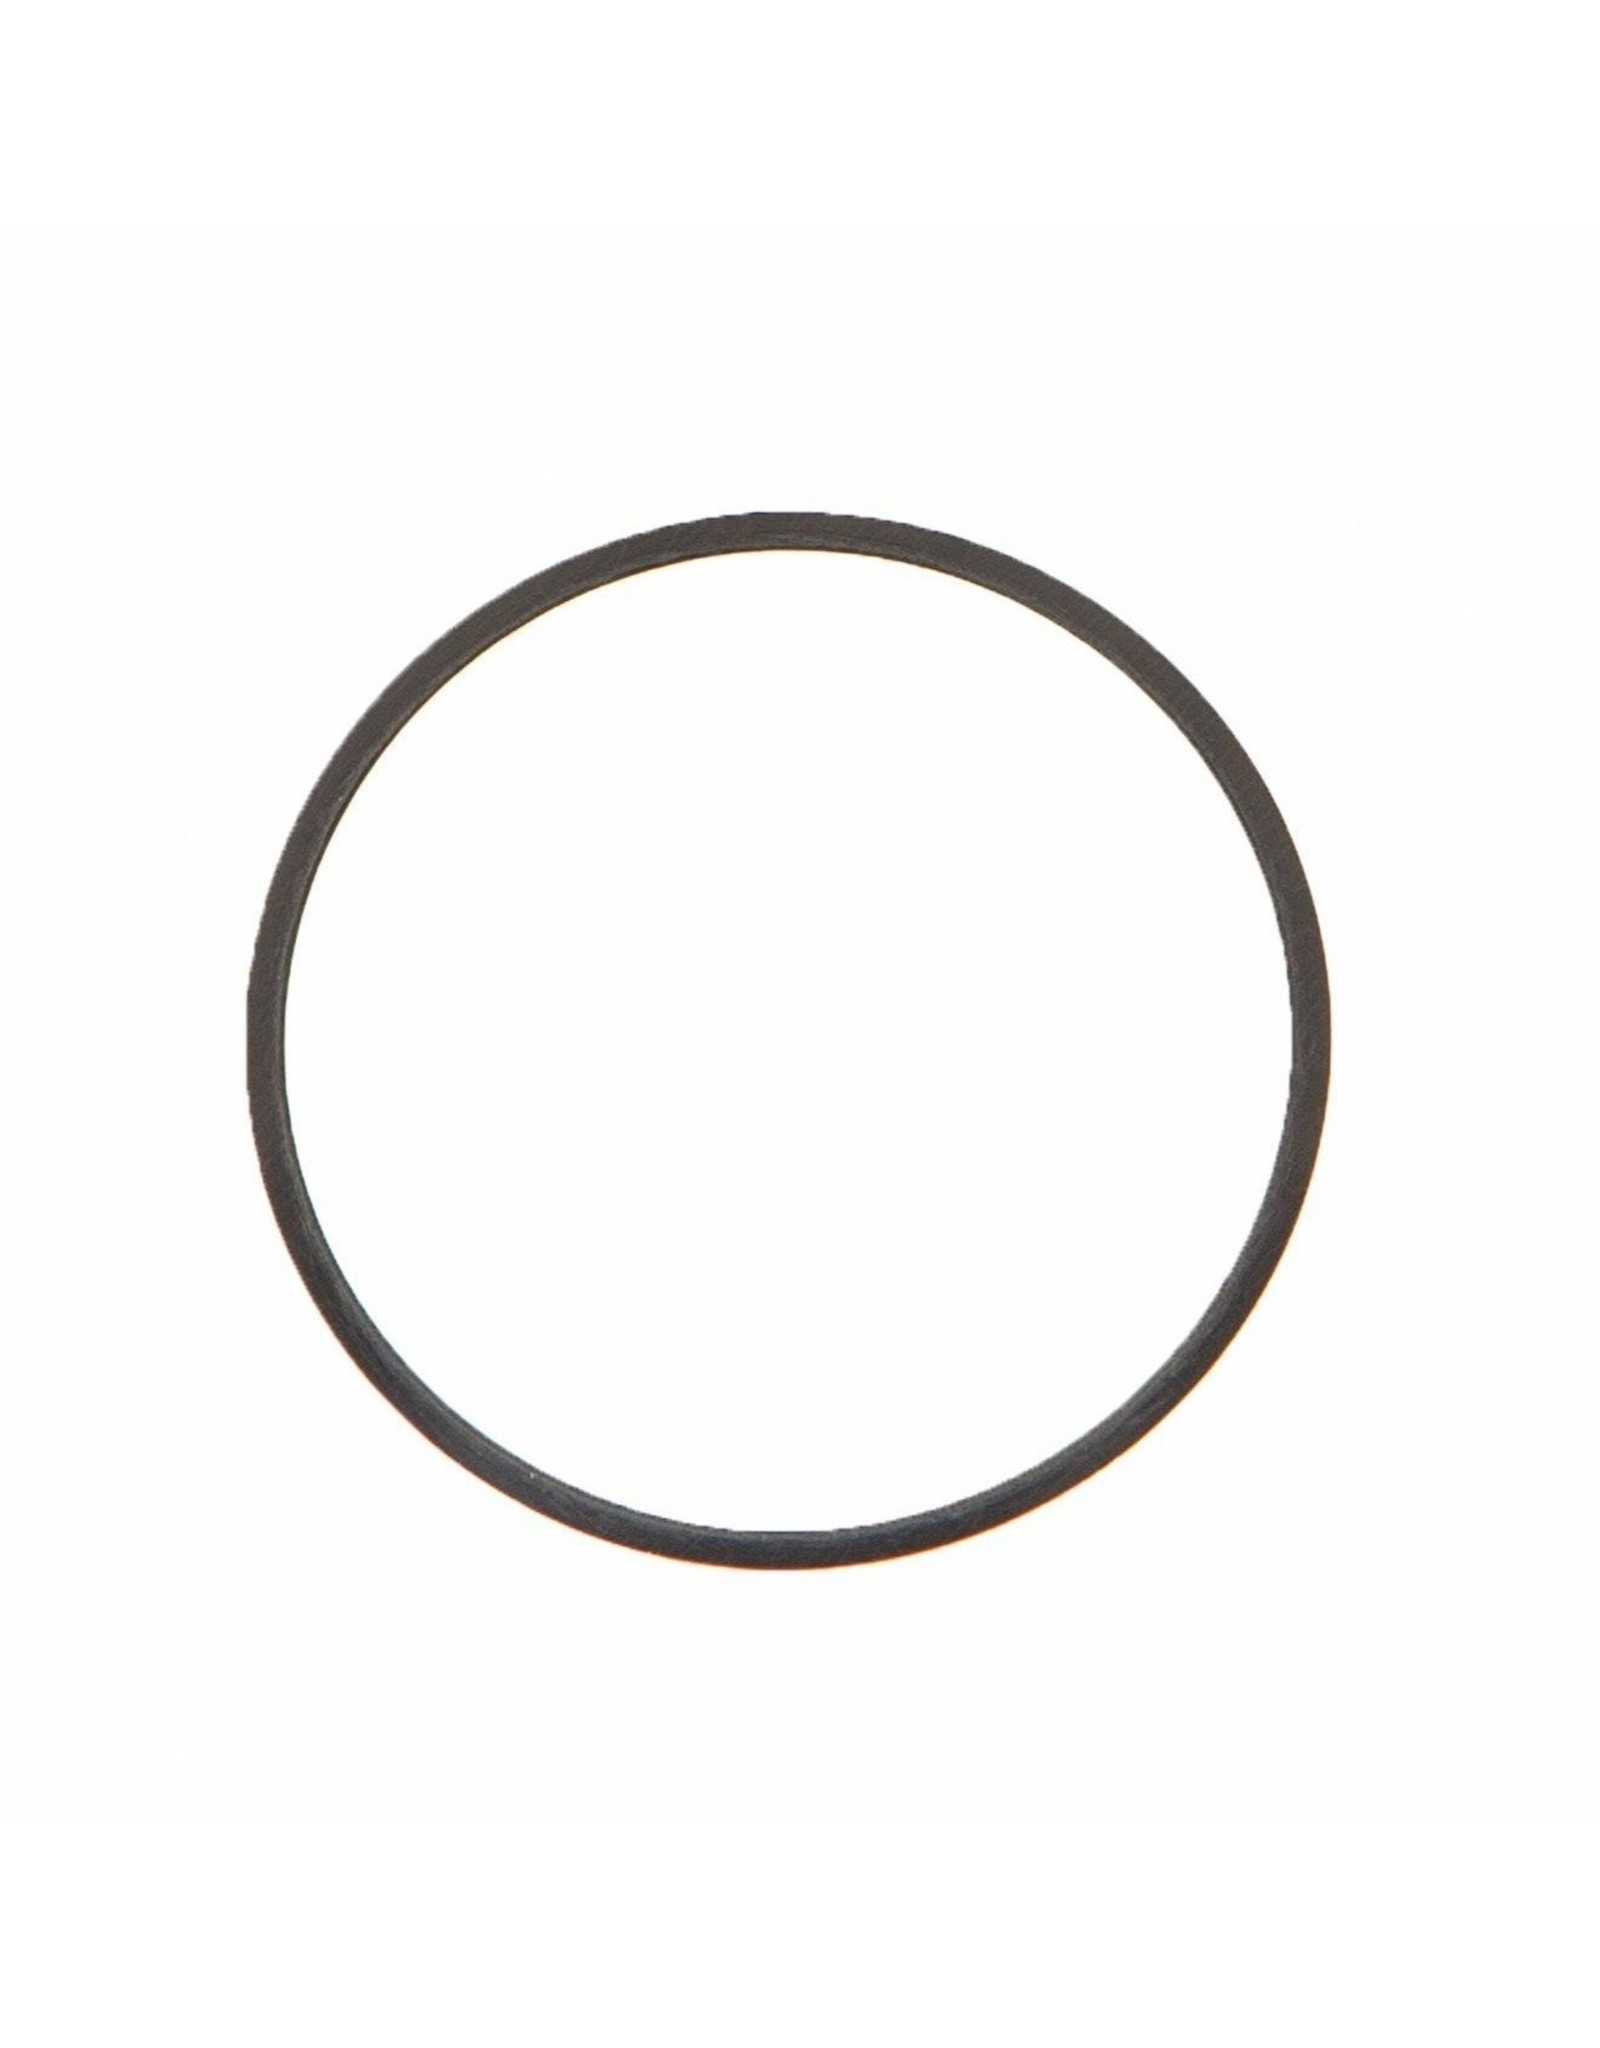 Baader Planetarium M54 Fine-Adjustment rings (0.3 mm) - Aluminium (0.3 mm)